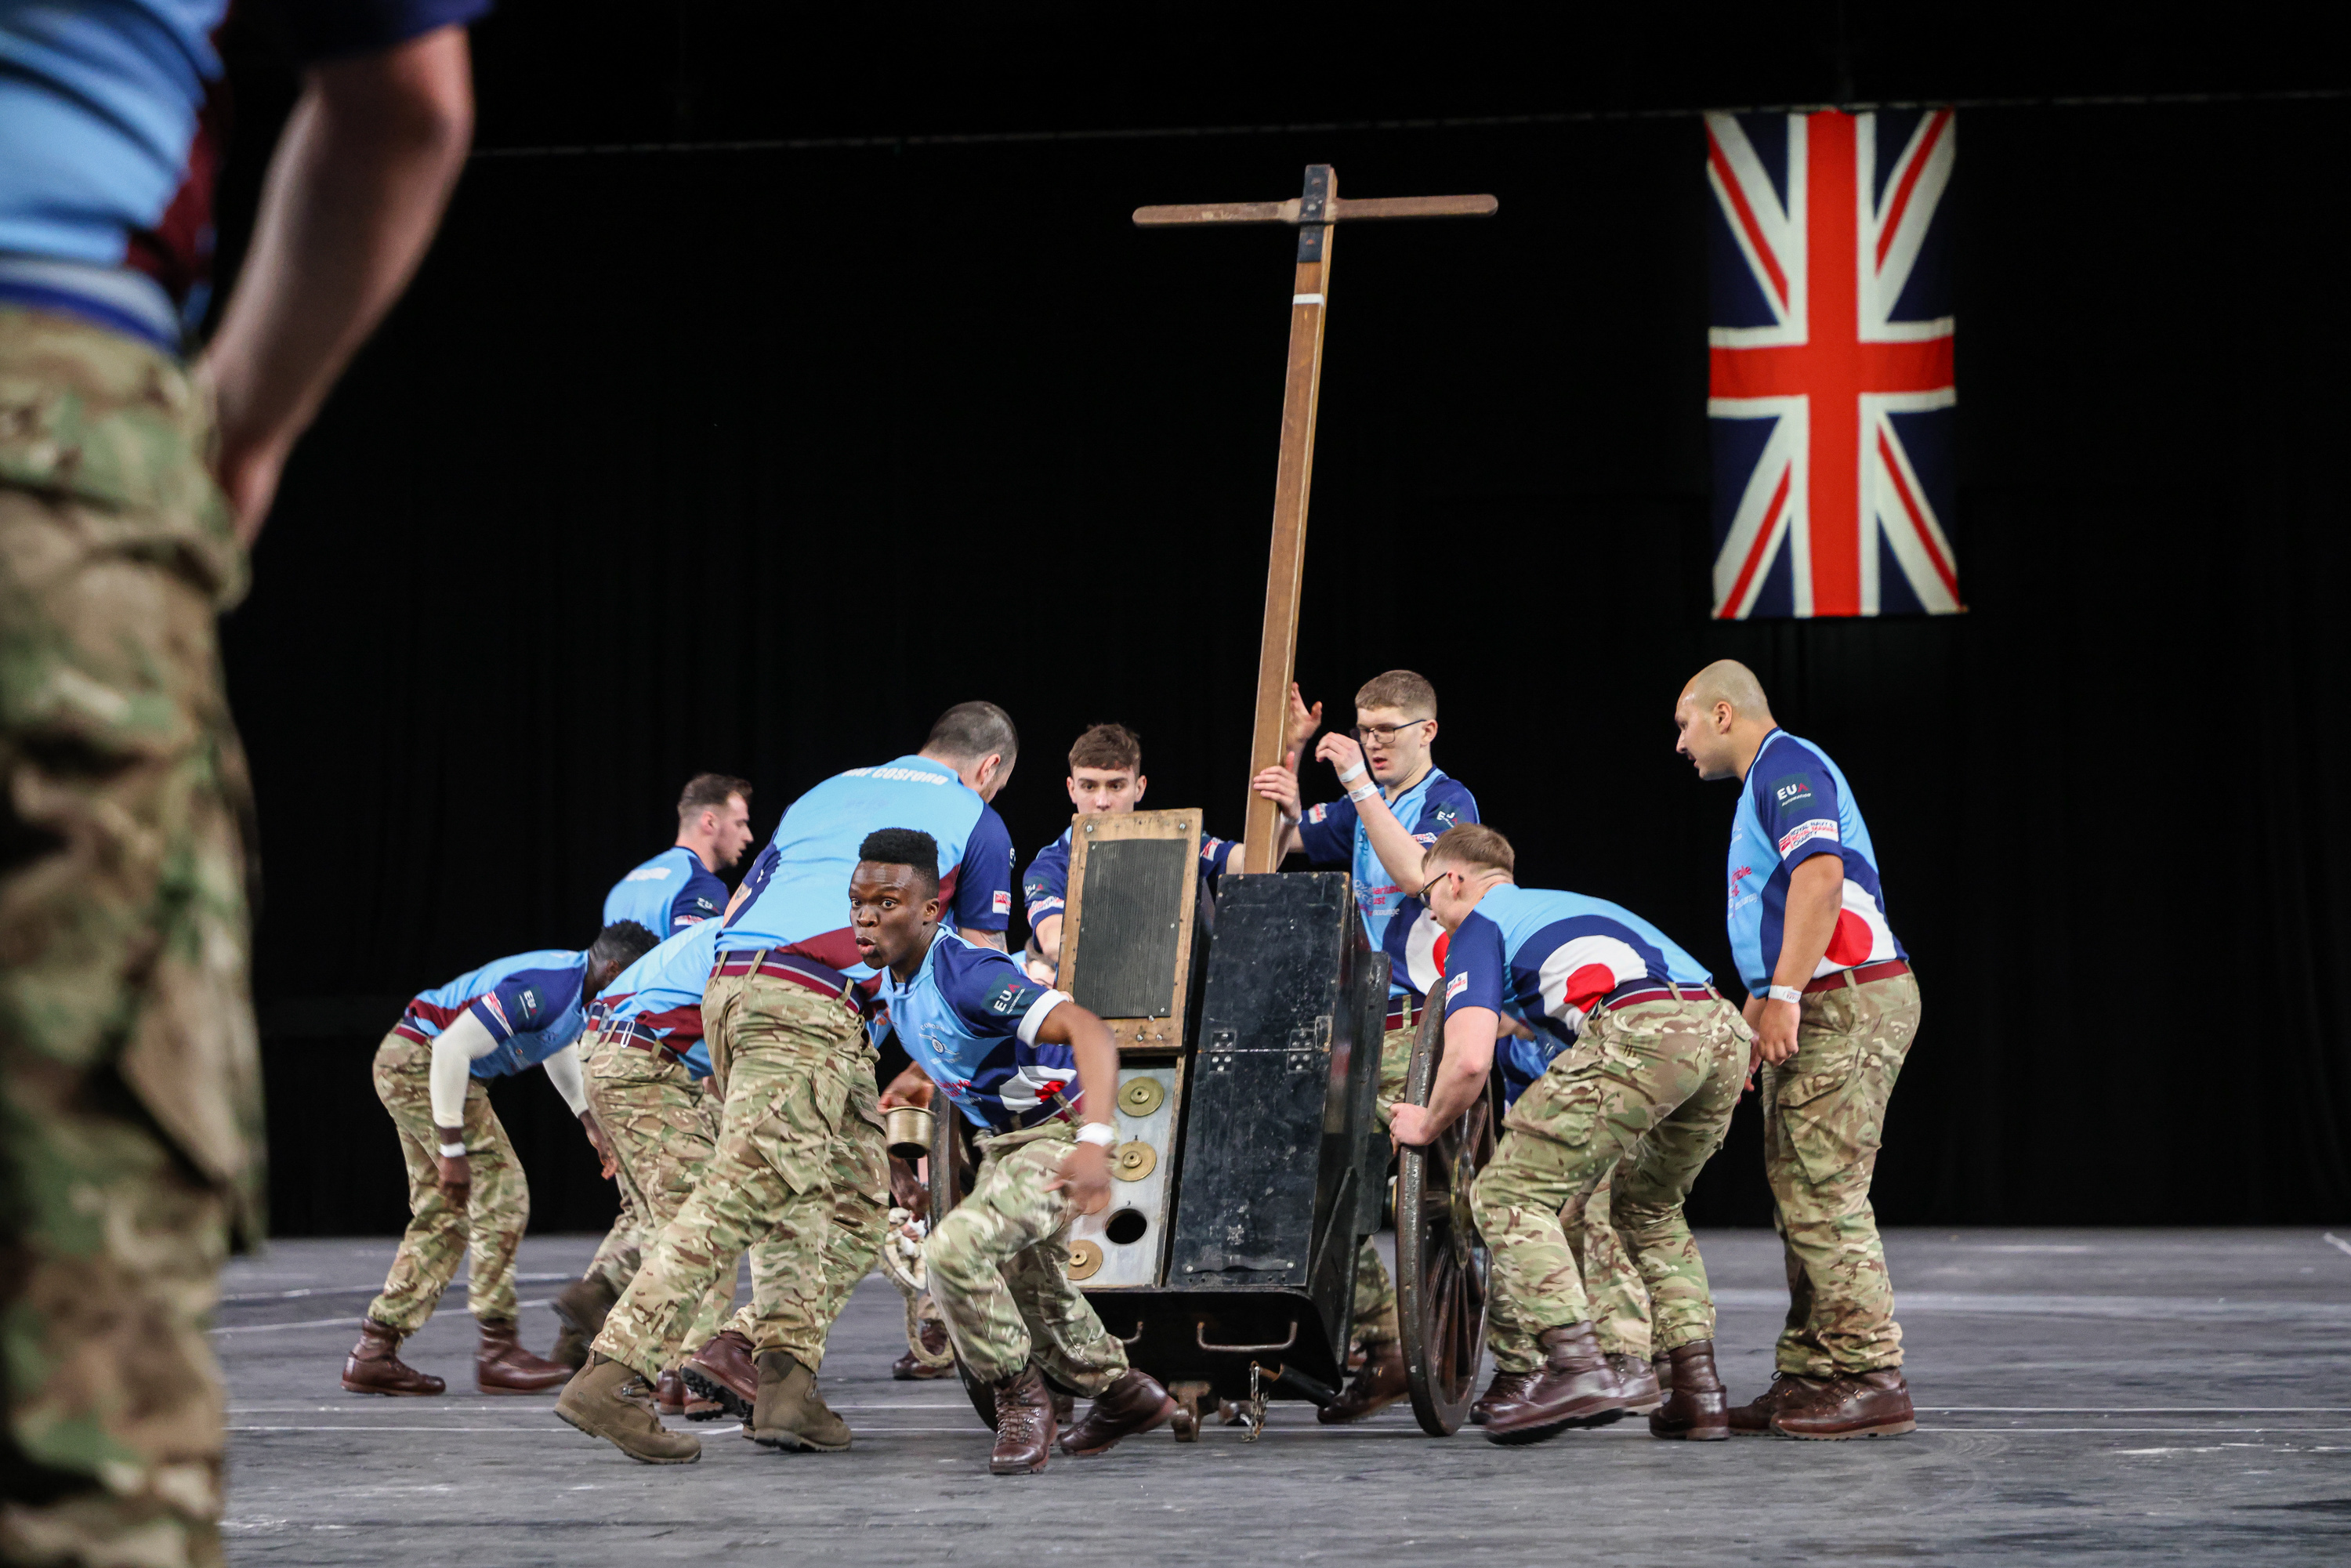 RAF Cosford Field Gun crew during their competition